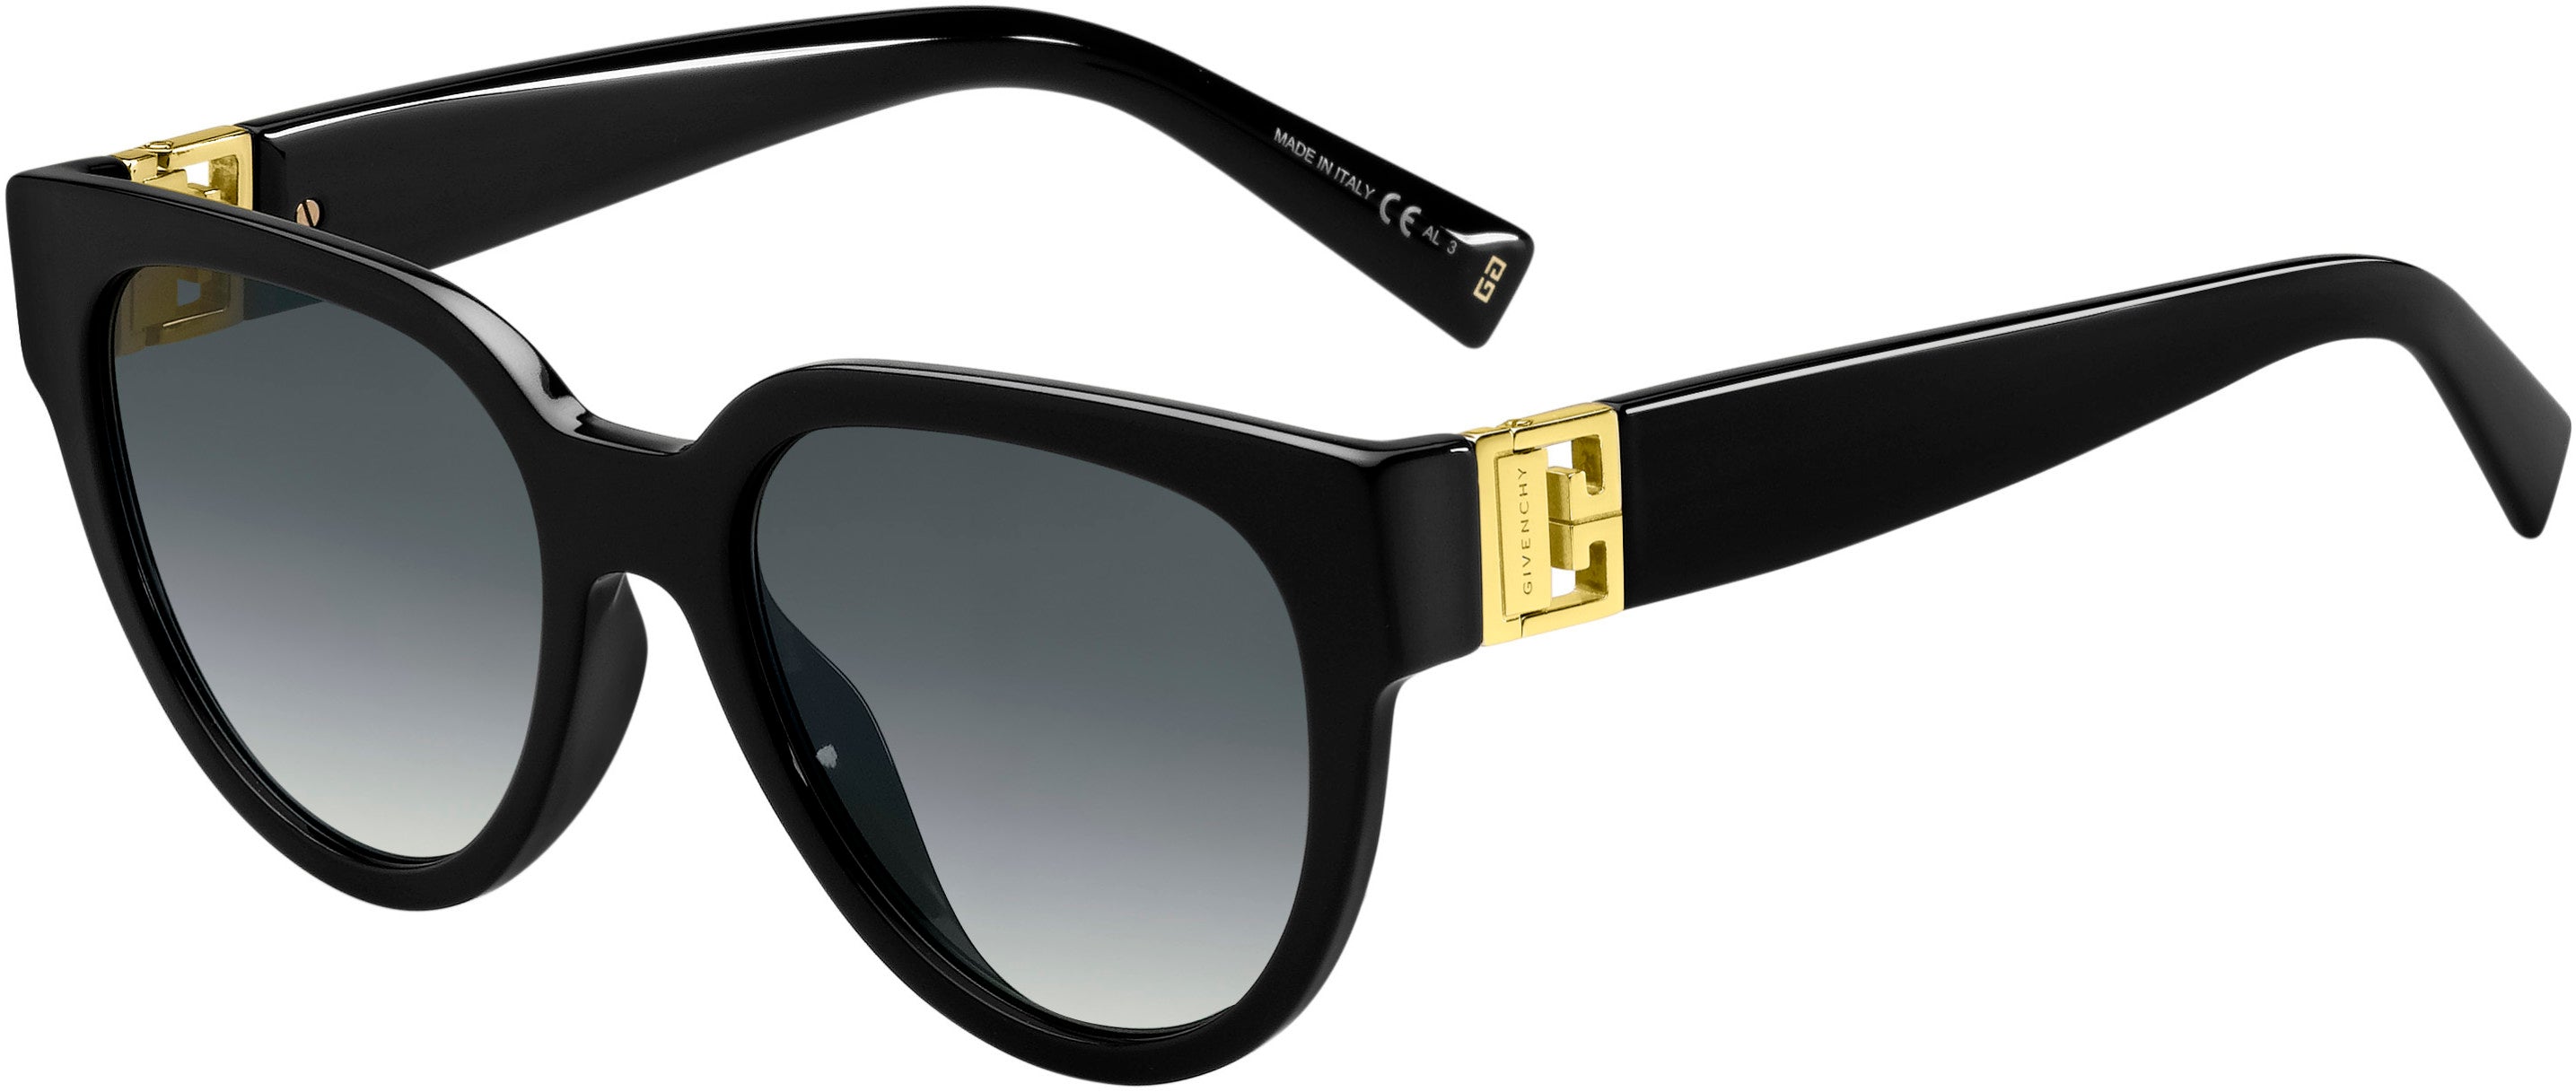  Givenchy 7155/G/S Oval Modified Sunglasses 0807-0807  Black (9O Dark Gray Gradient)